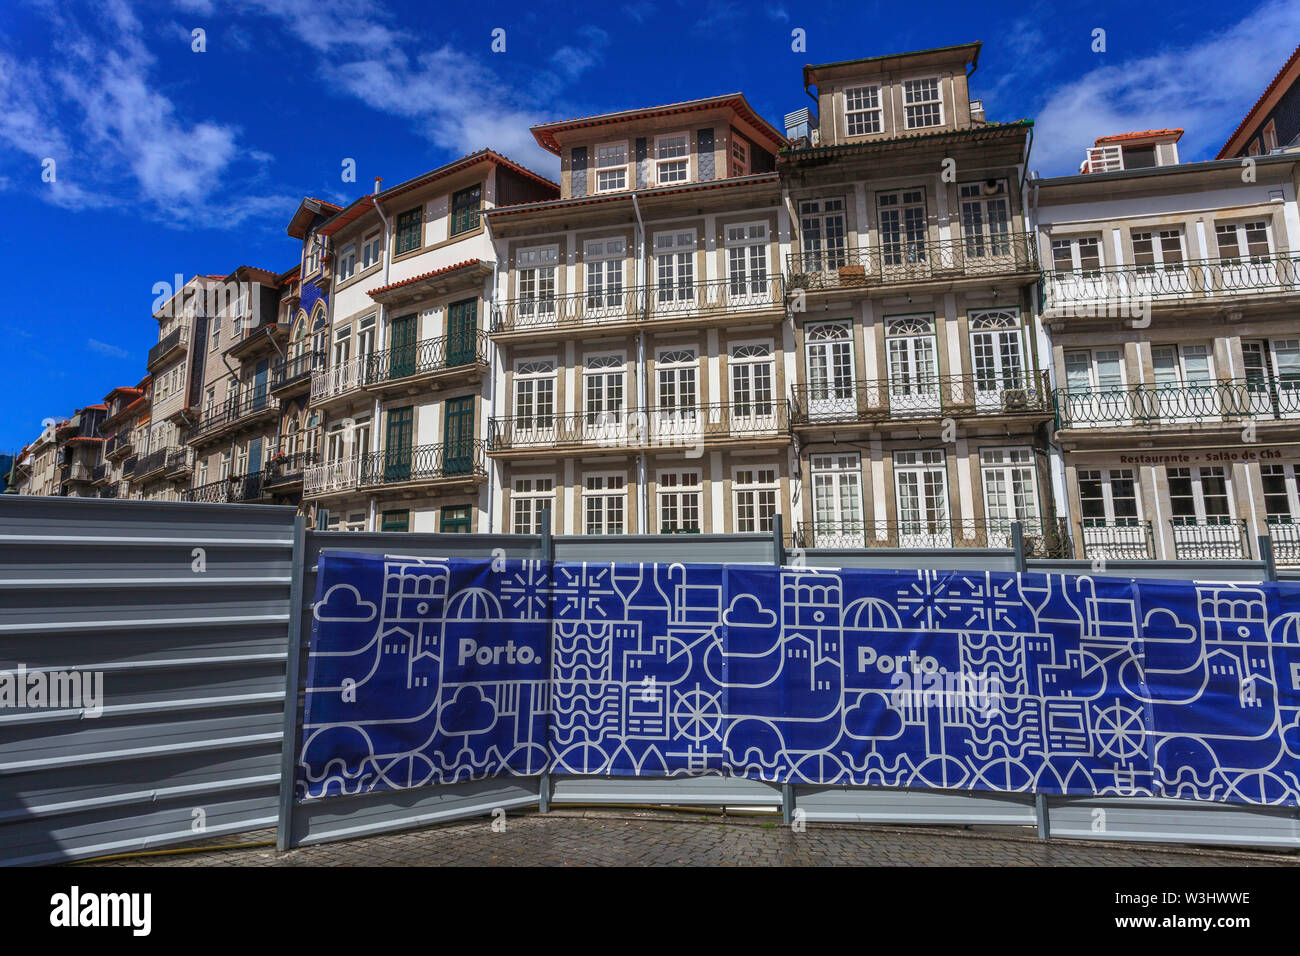 Typical building facades in Oporto Stock Photo